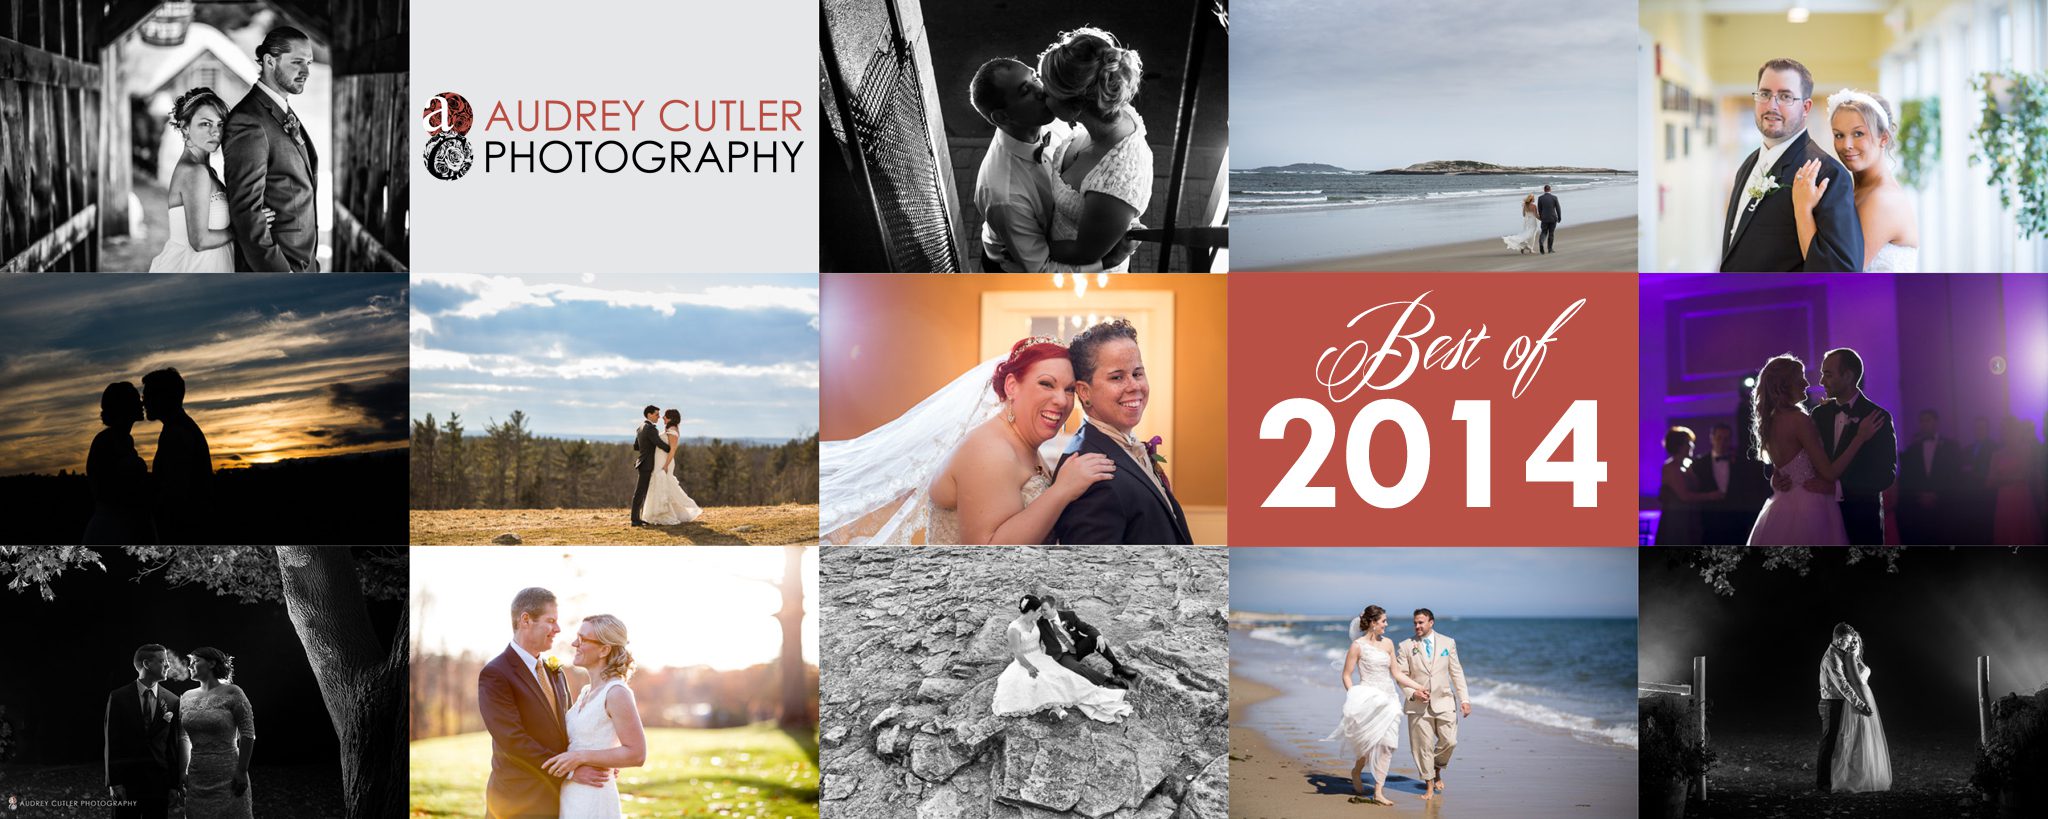 Audrey-Cutler-Photography-Best-of-Contest-2014-candid-wedding-photographer-favorite-wedding